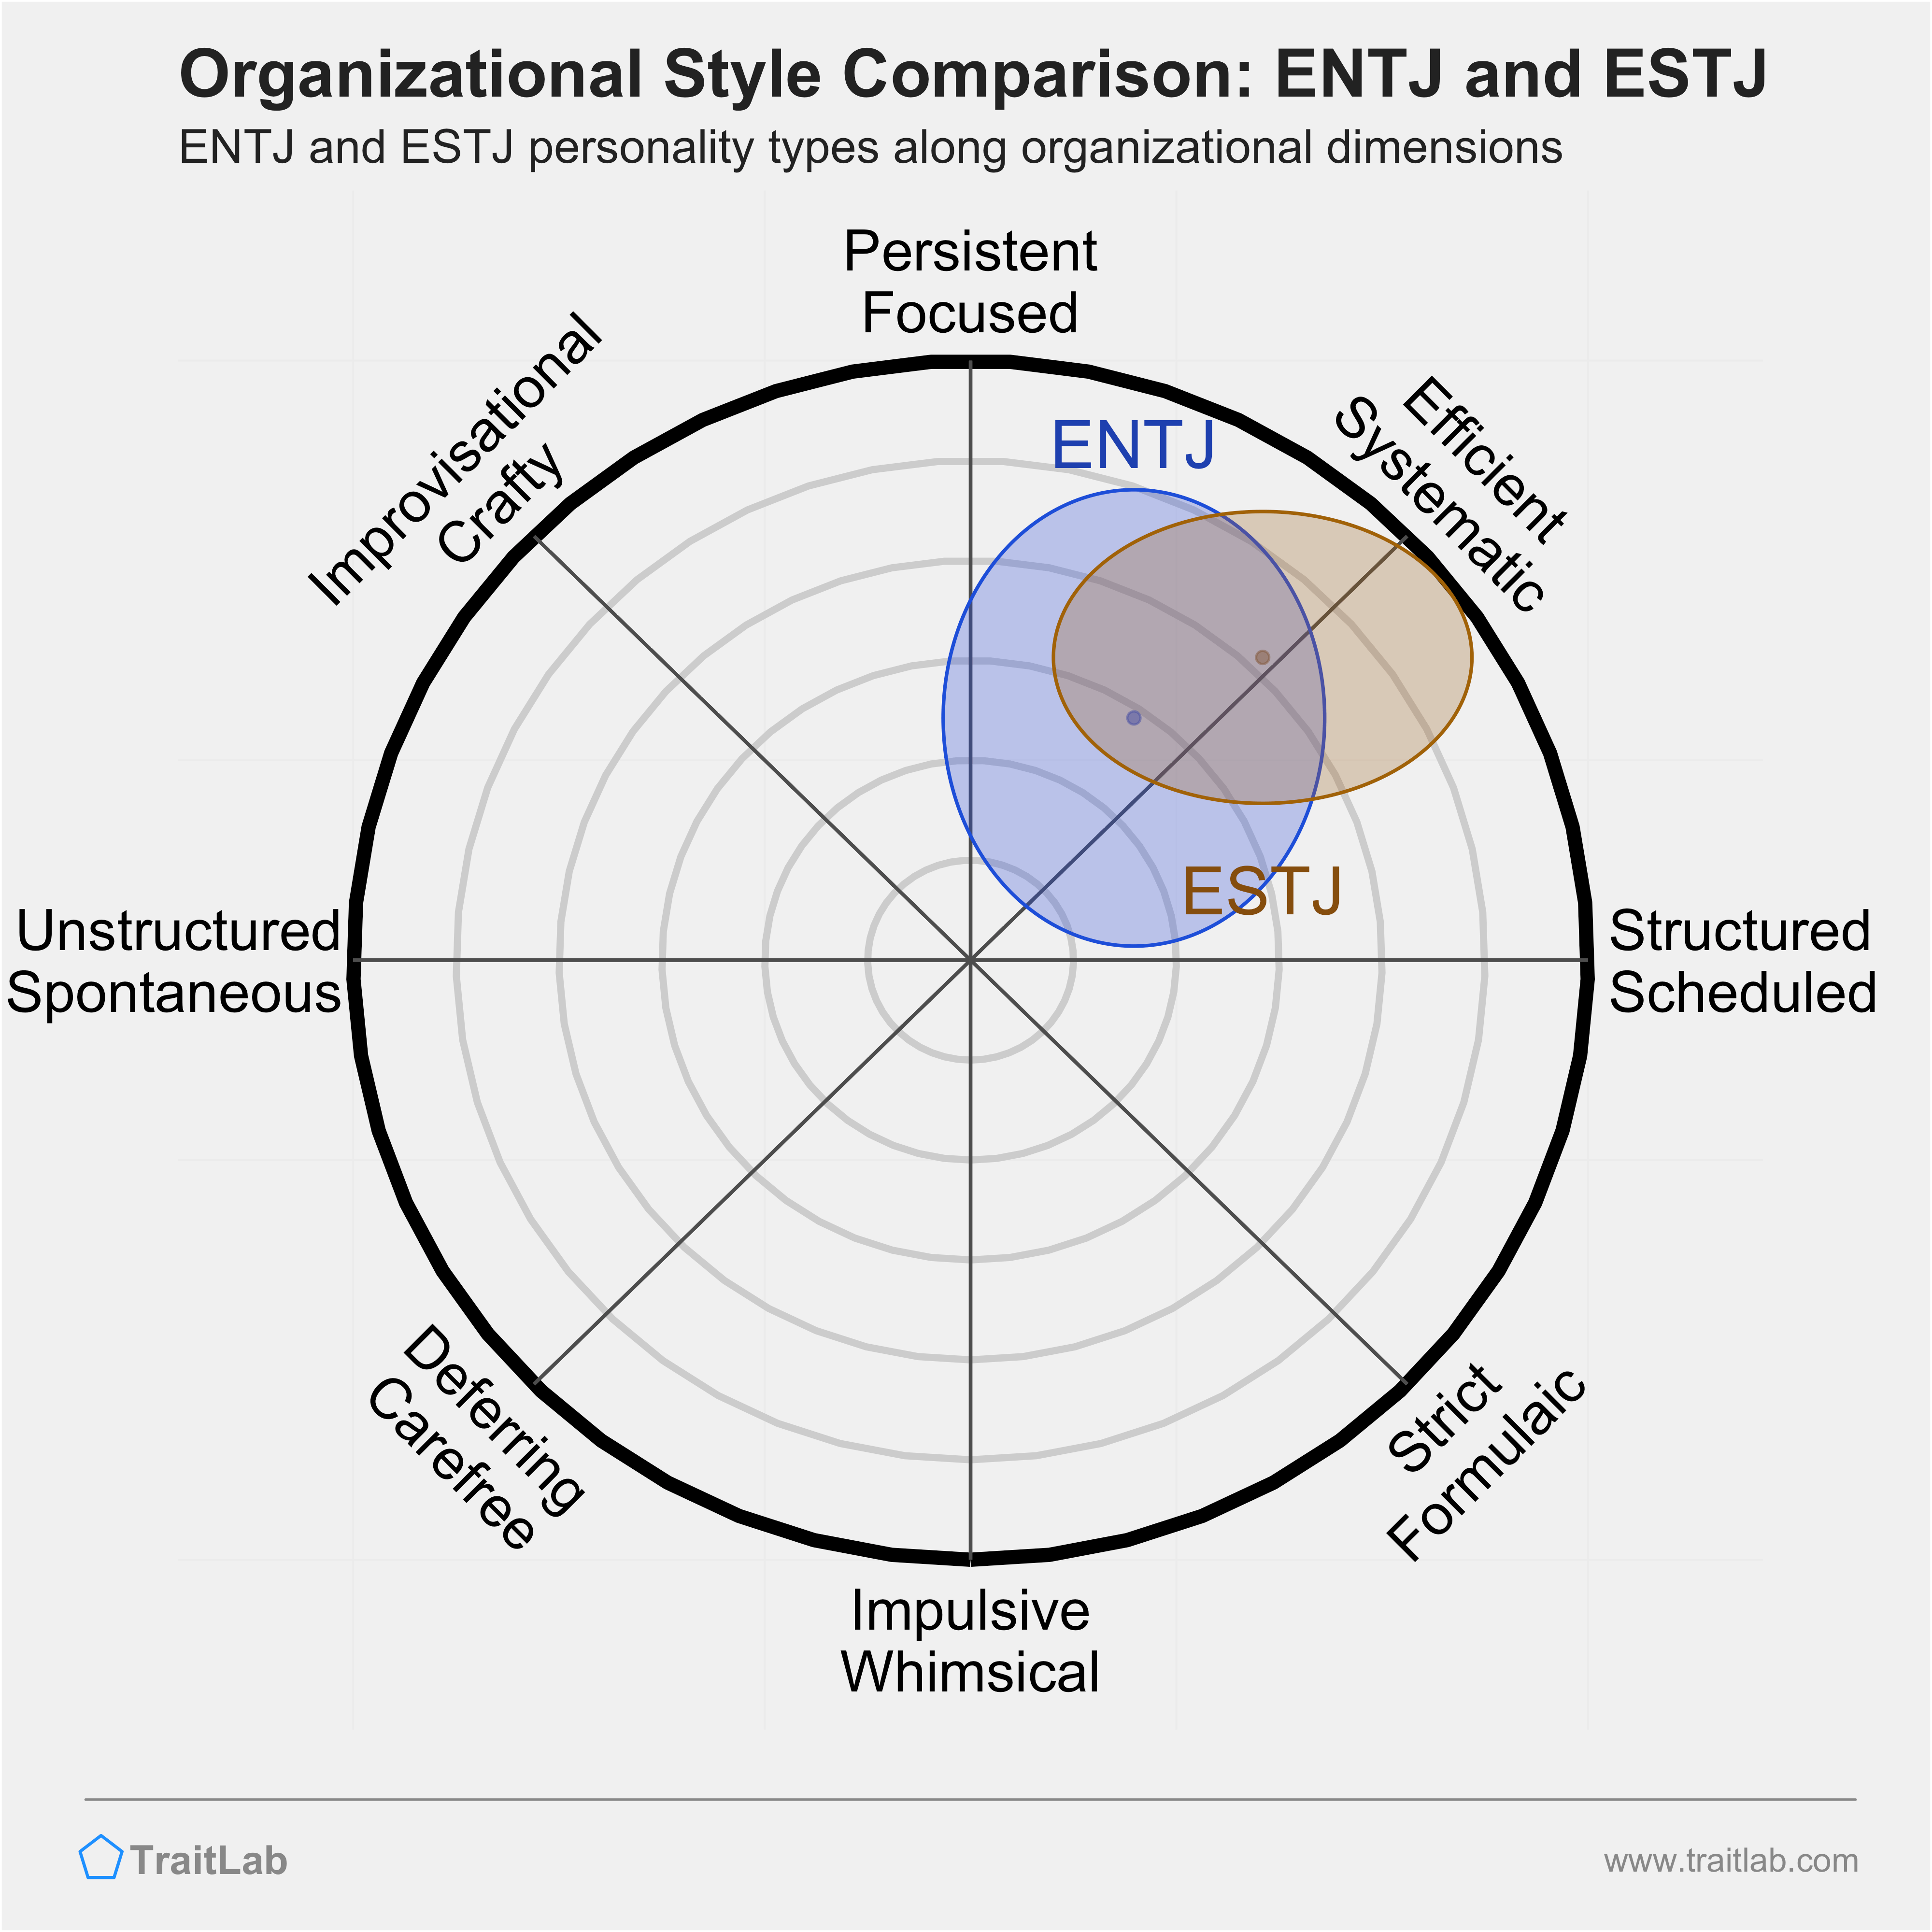 ENTJ and ESTJ comparison across organizational dimensions